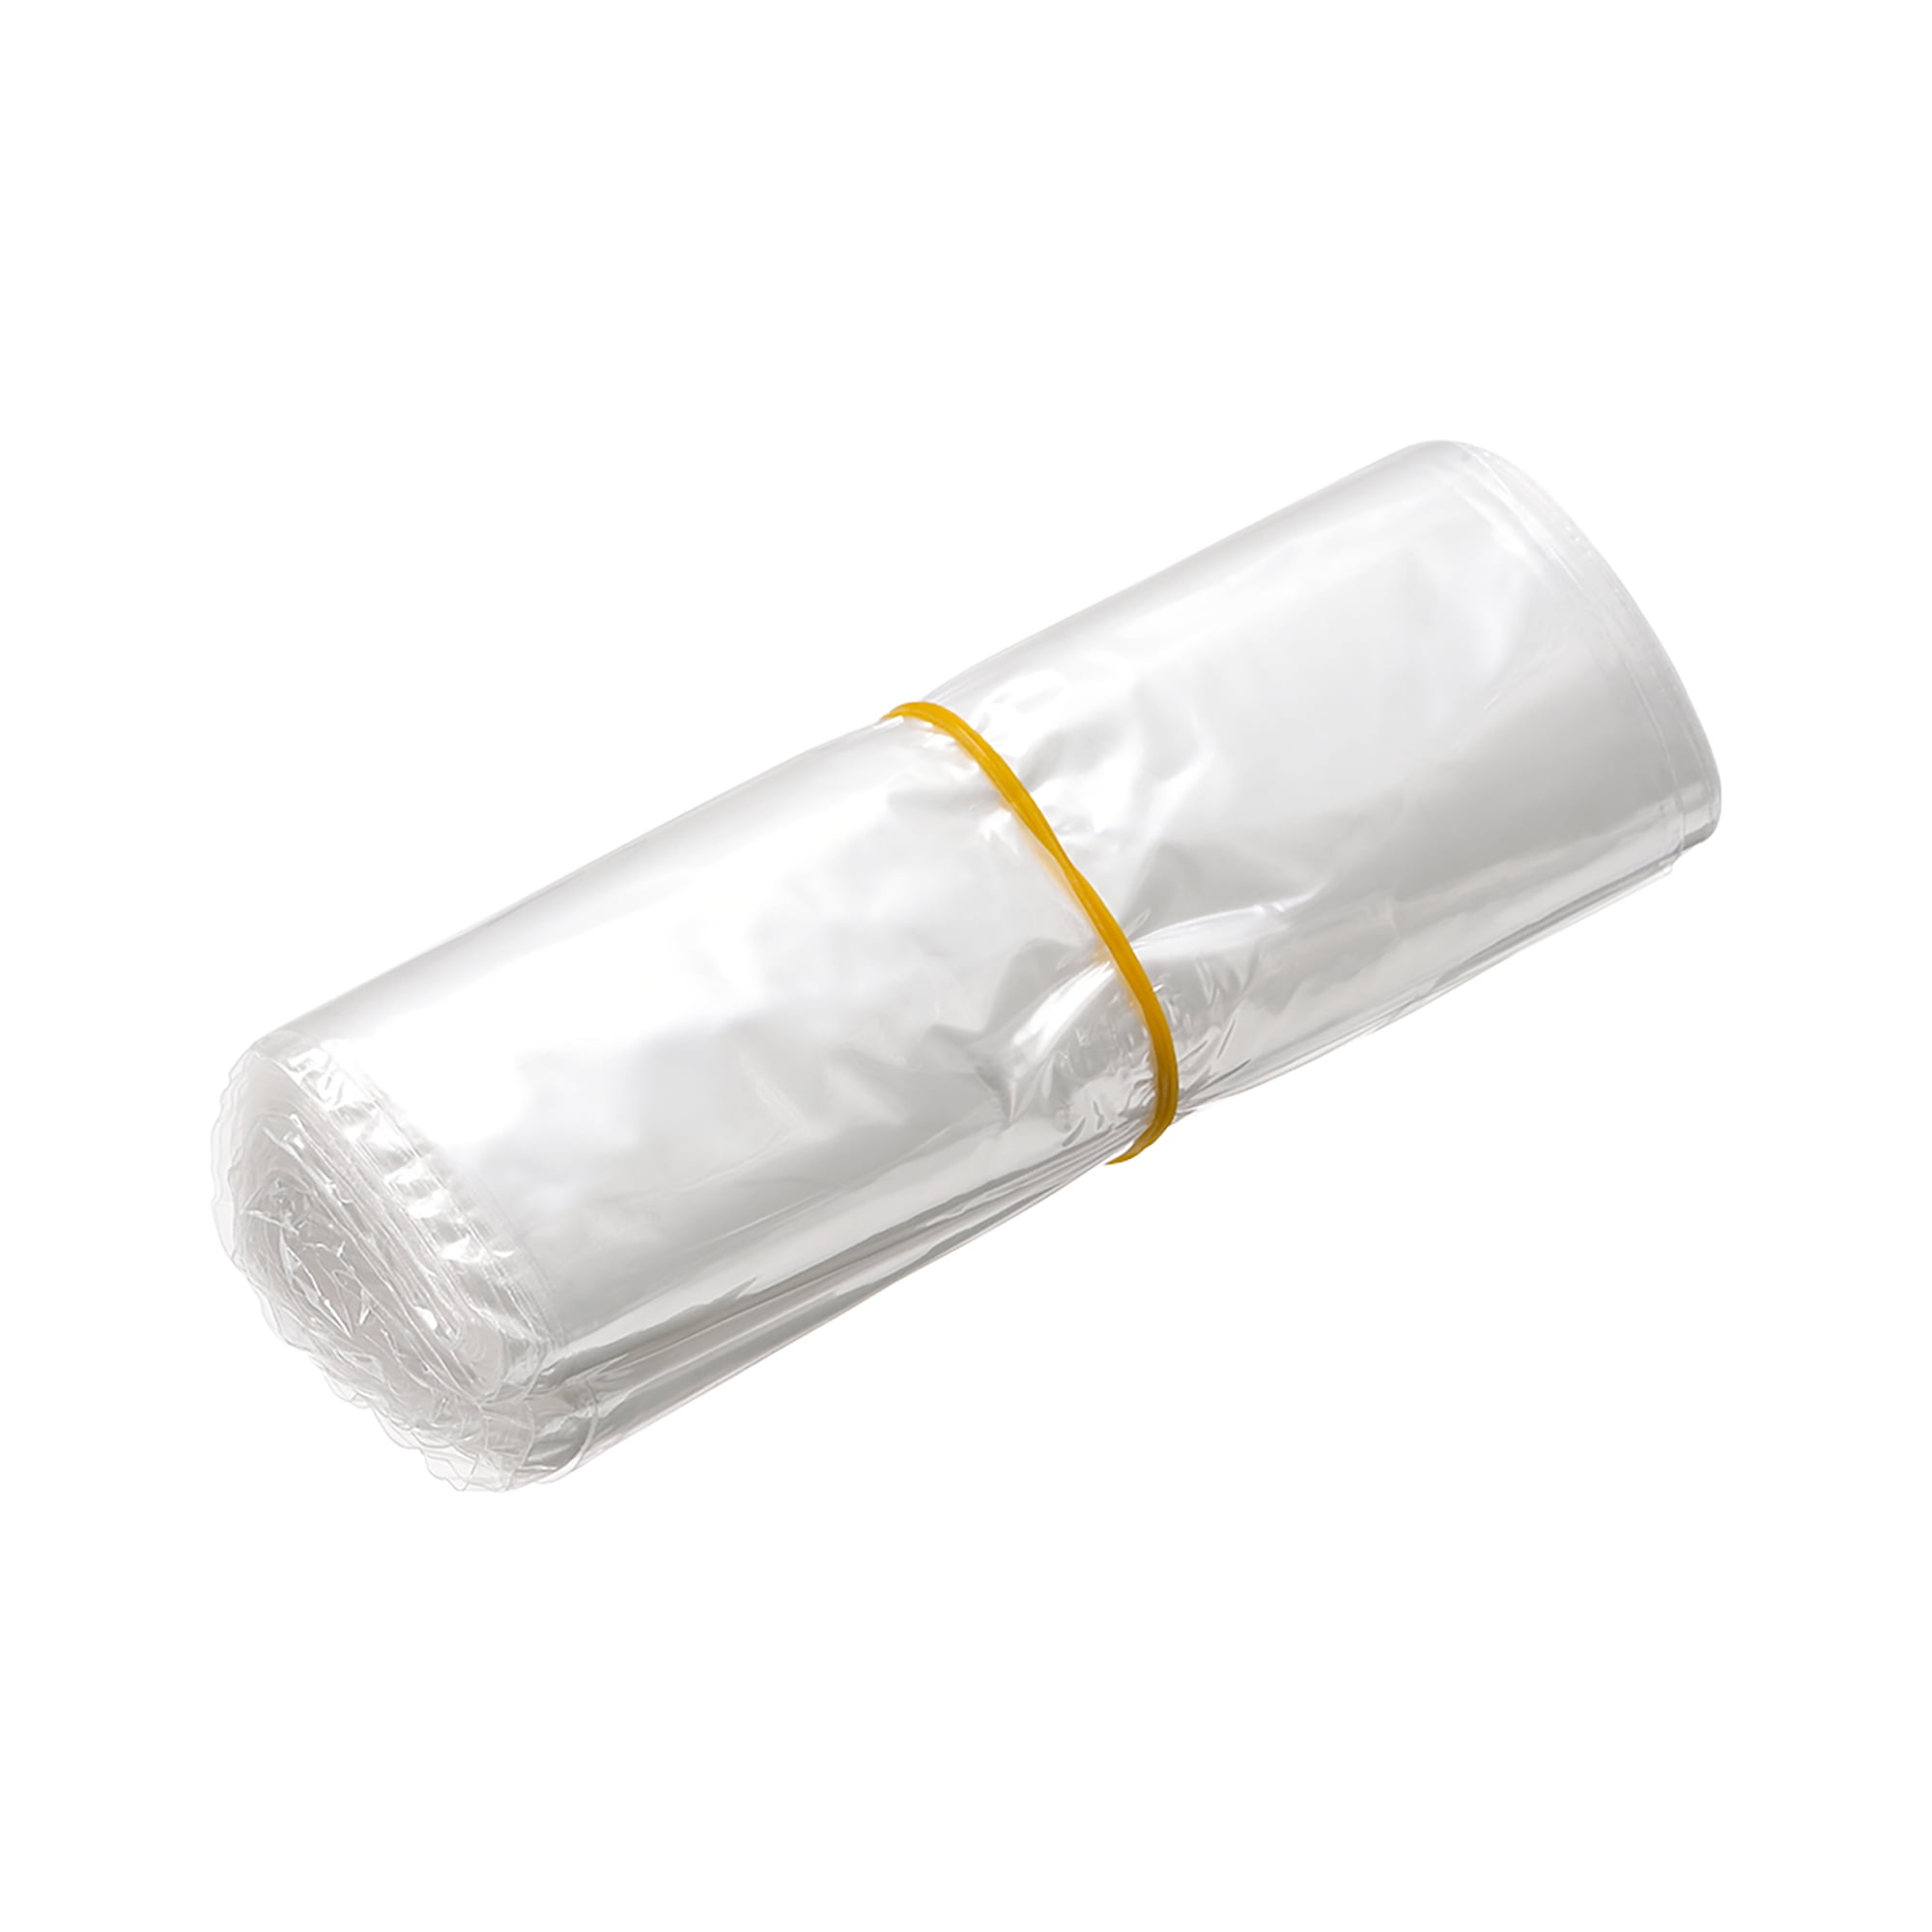 100PCS Heat Shrink Bag Wrap Film Packaging Seal 8"x12" Clear PVC Shrinkable 